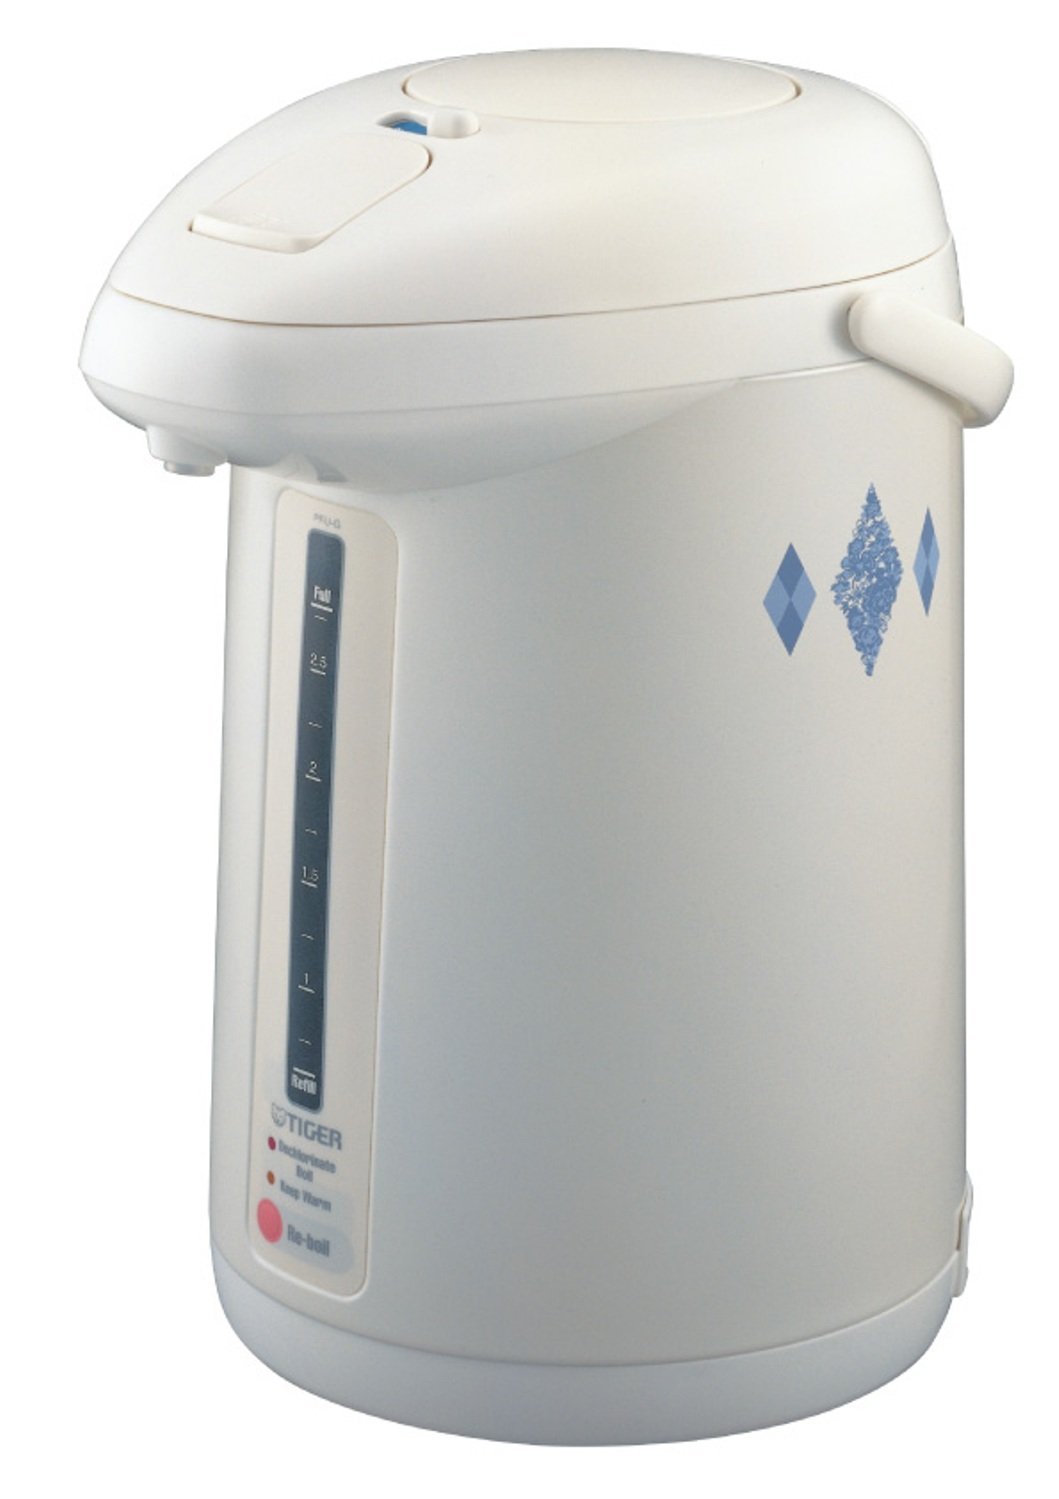 Tiger PFU-G30U Electric Water Heater/Dispenser Review